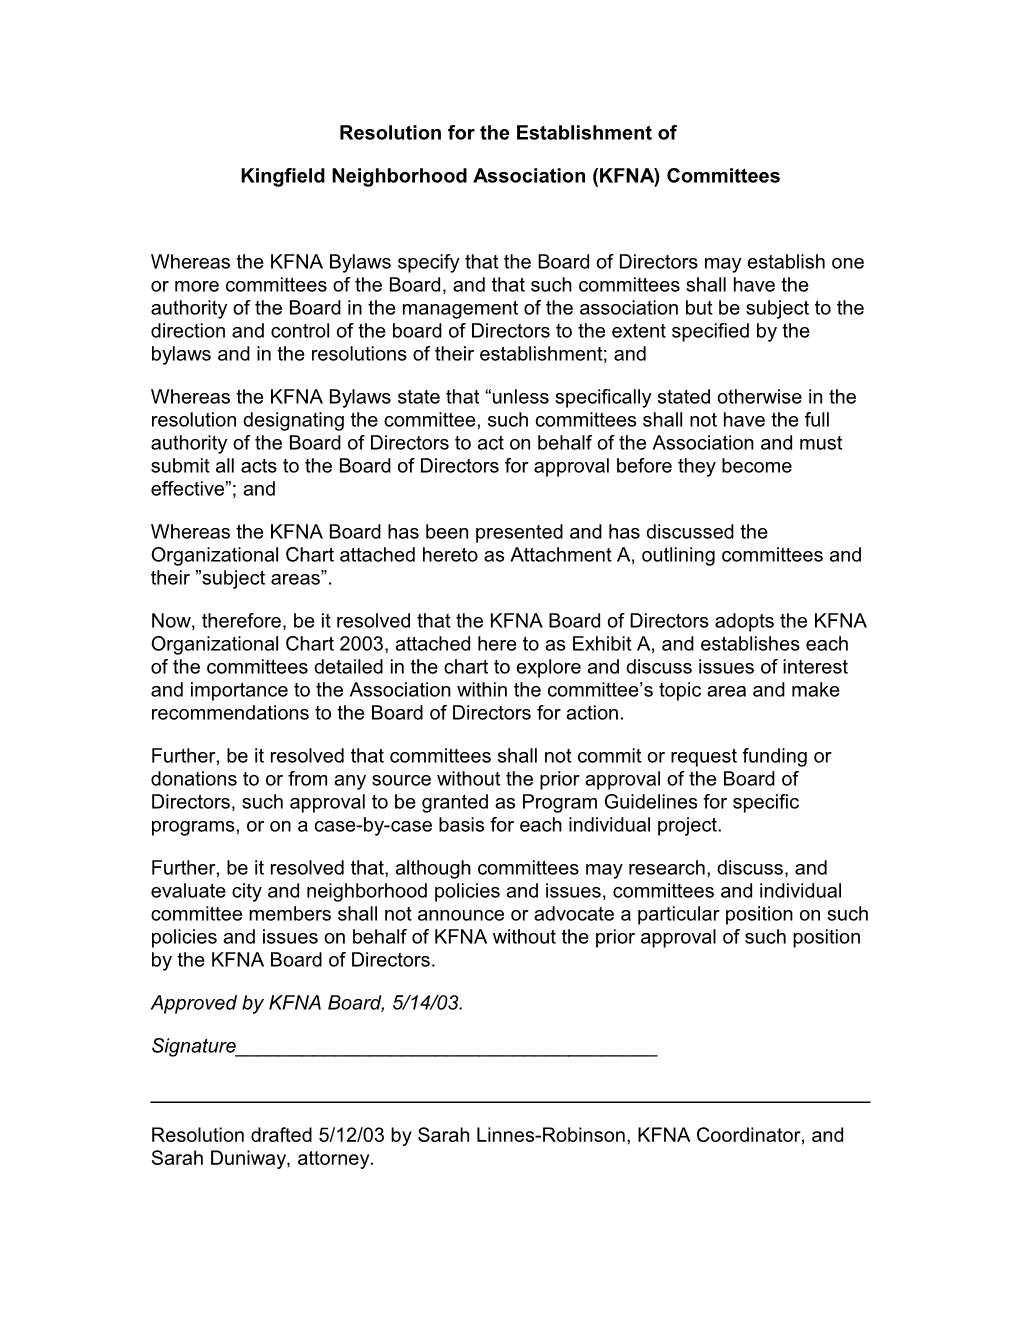 DRAFT Resolution for the Establishment of Kingfield Neighborhood Association (KFNA) Committees